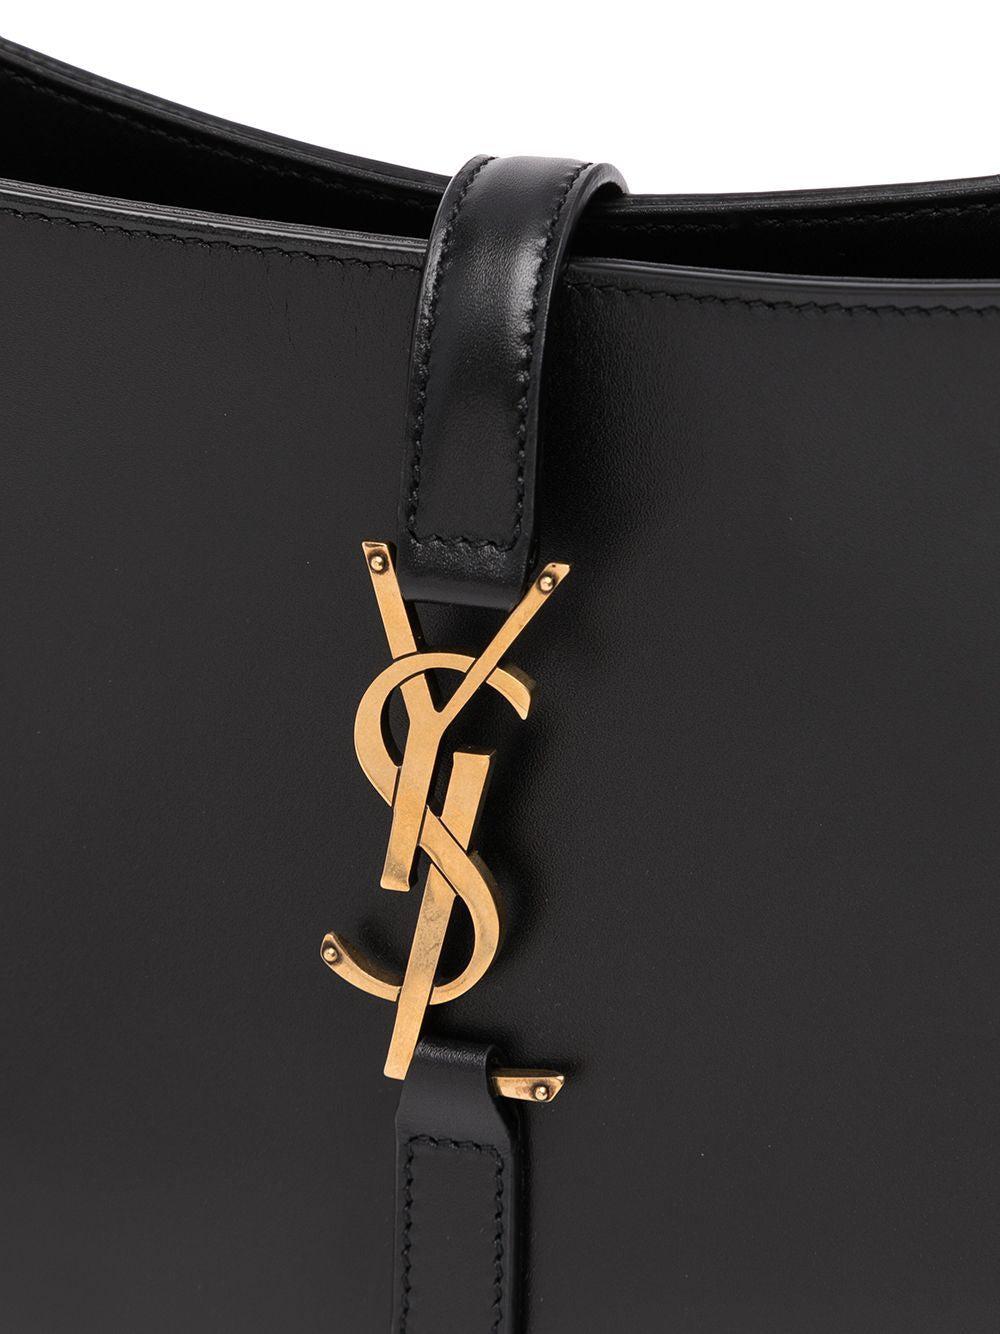 Shop Saint Laurent Le 5 à 7 Hobo Bag In Smooth Leather